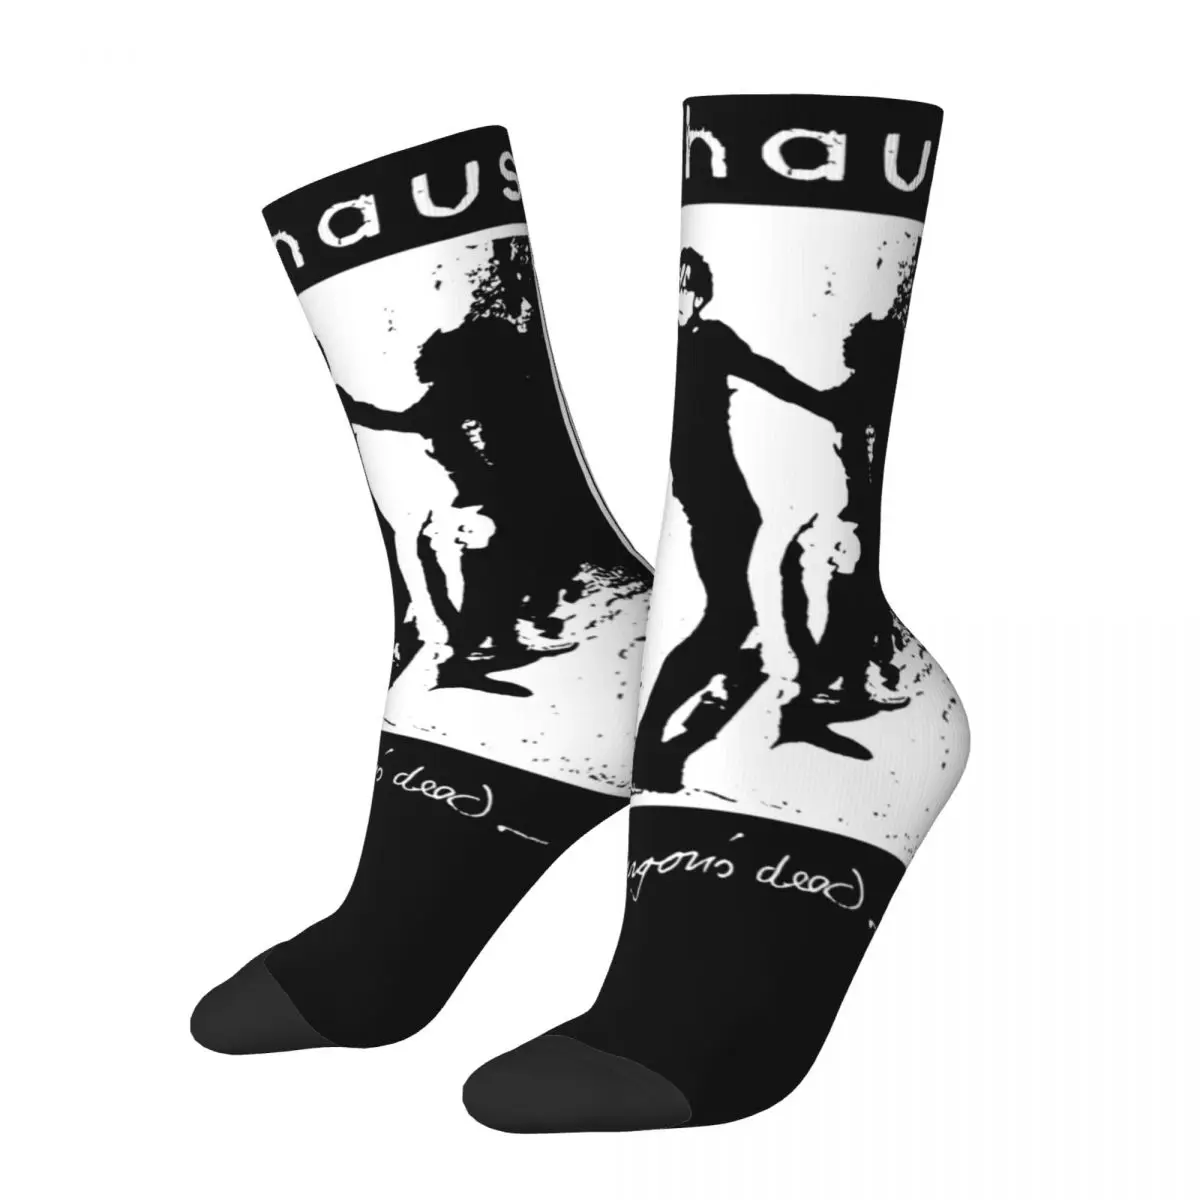 

Funny Men's Women's Bauhaus Bela Lugosi's Dead Album Design Socks Black Metal Band Product Soft Socks Cotton Wonderful Gifts